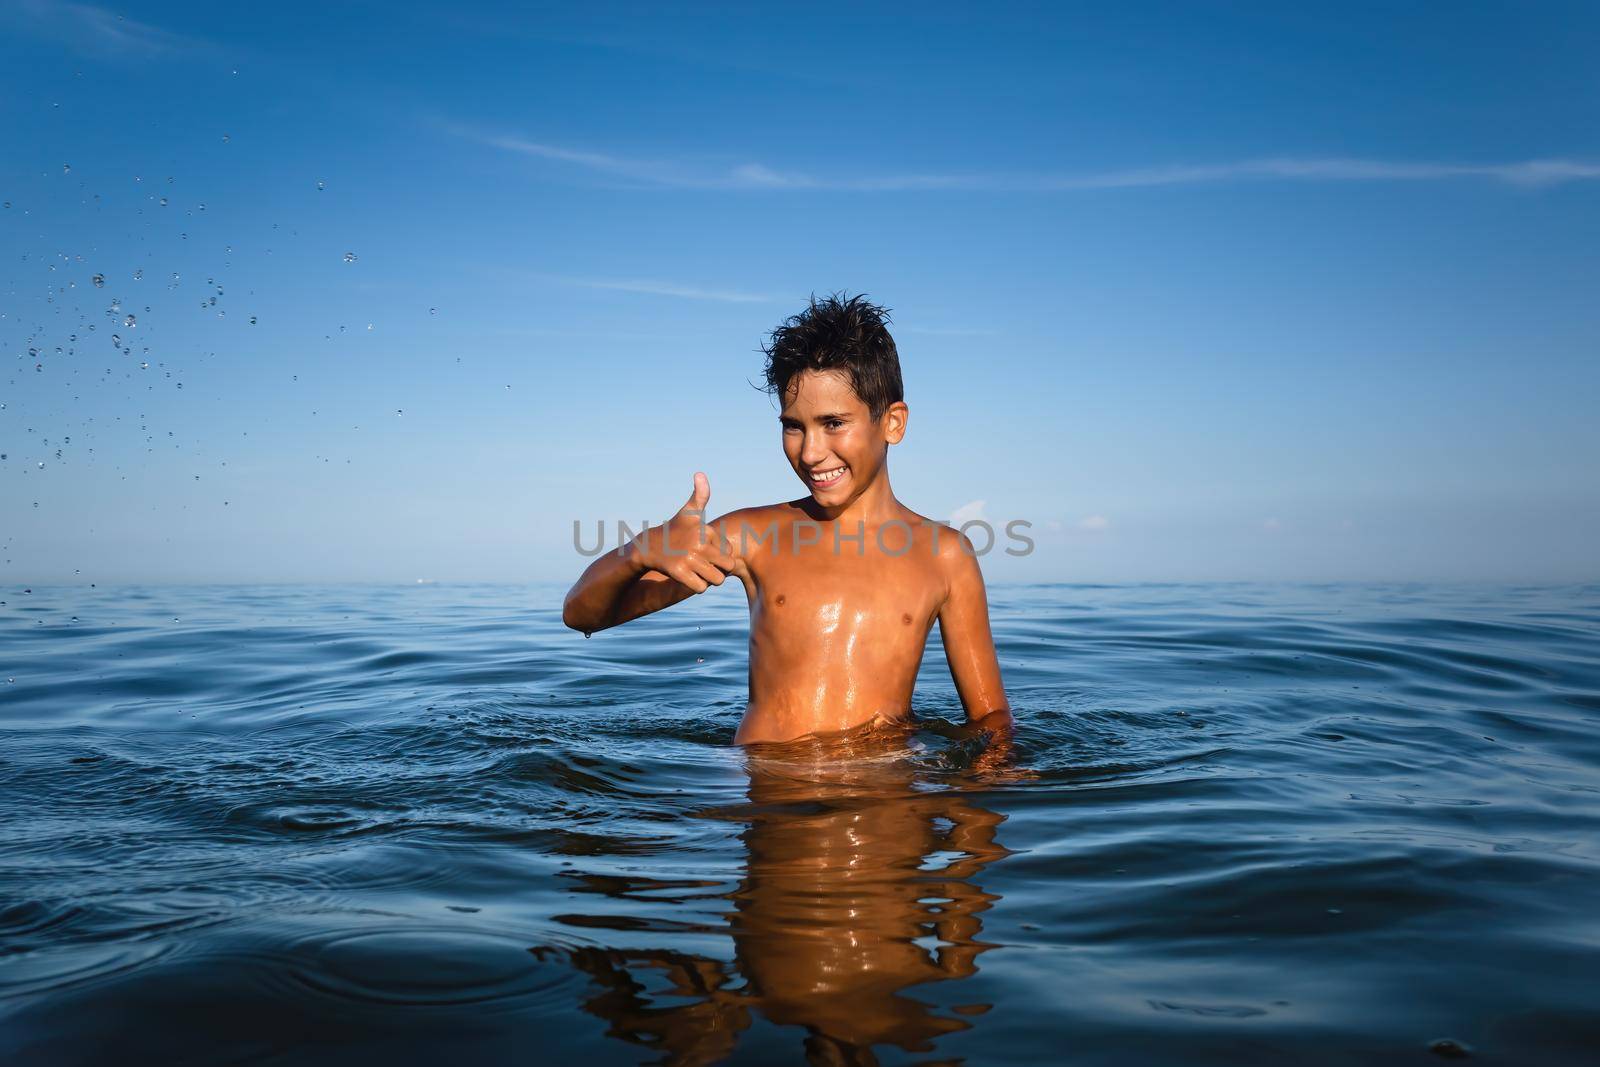  boy bathes in the sea by palinchak